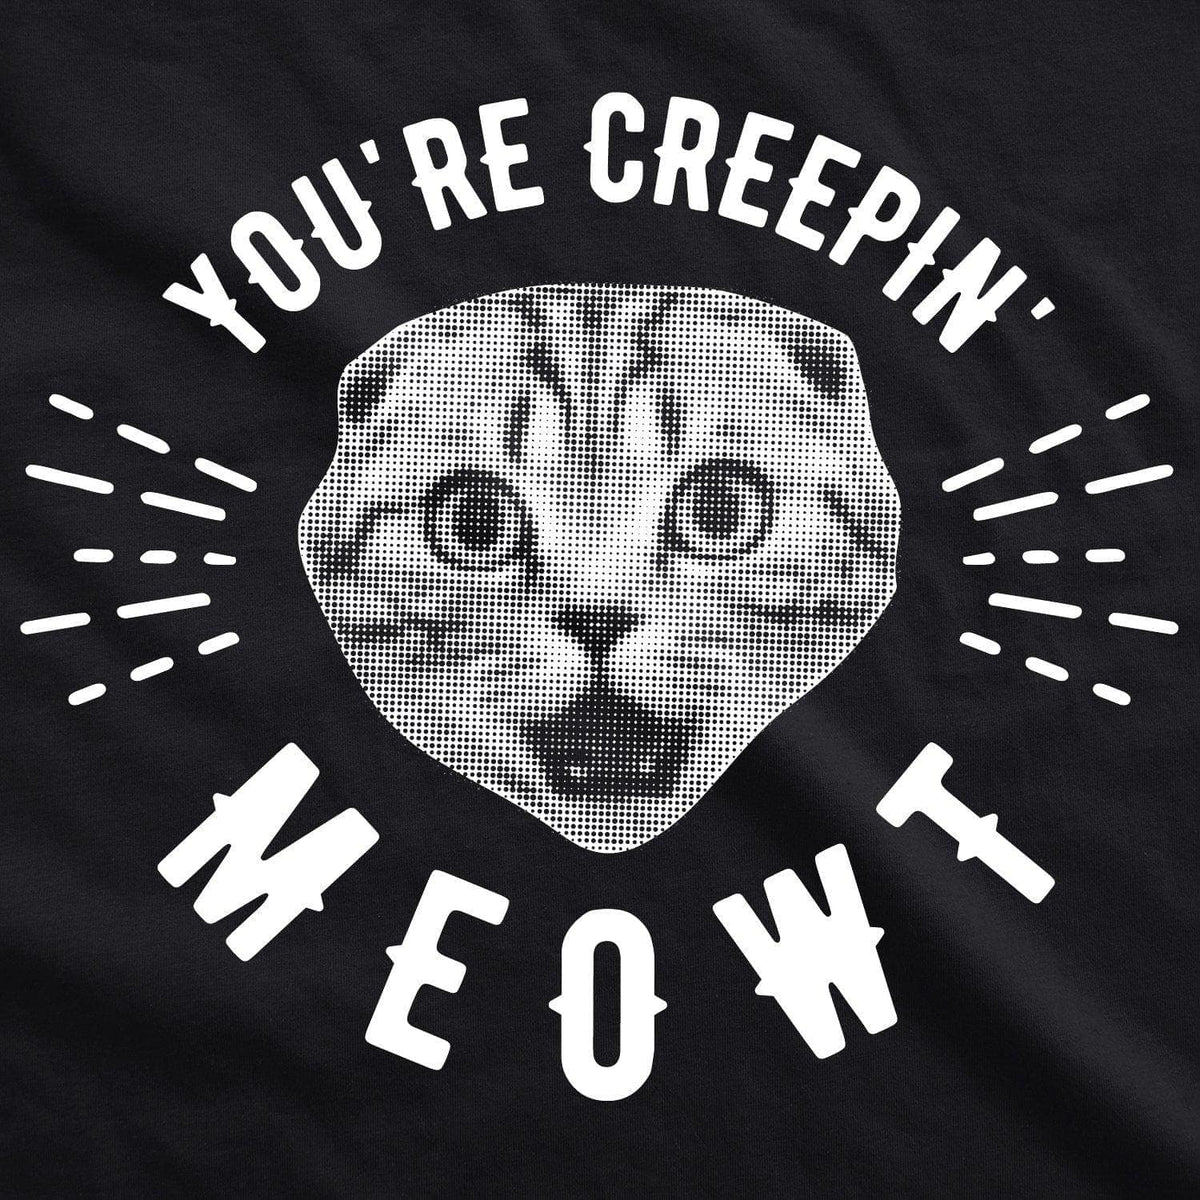 You&#39;re Creepin Meowt Men&#39;s Tshirt - Crazy Dog T-Shirts